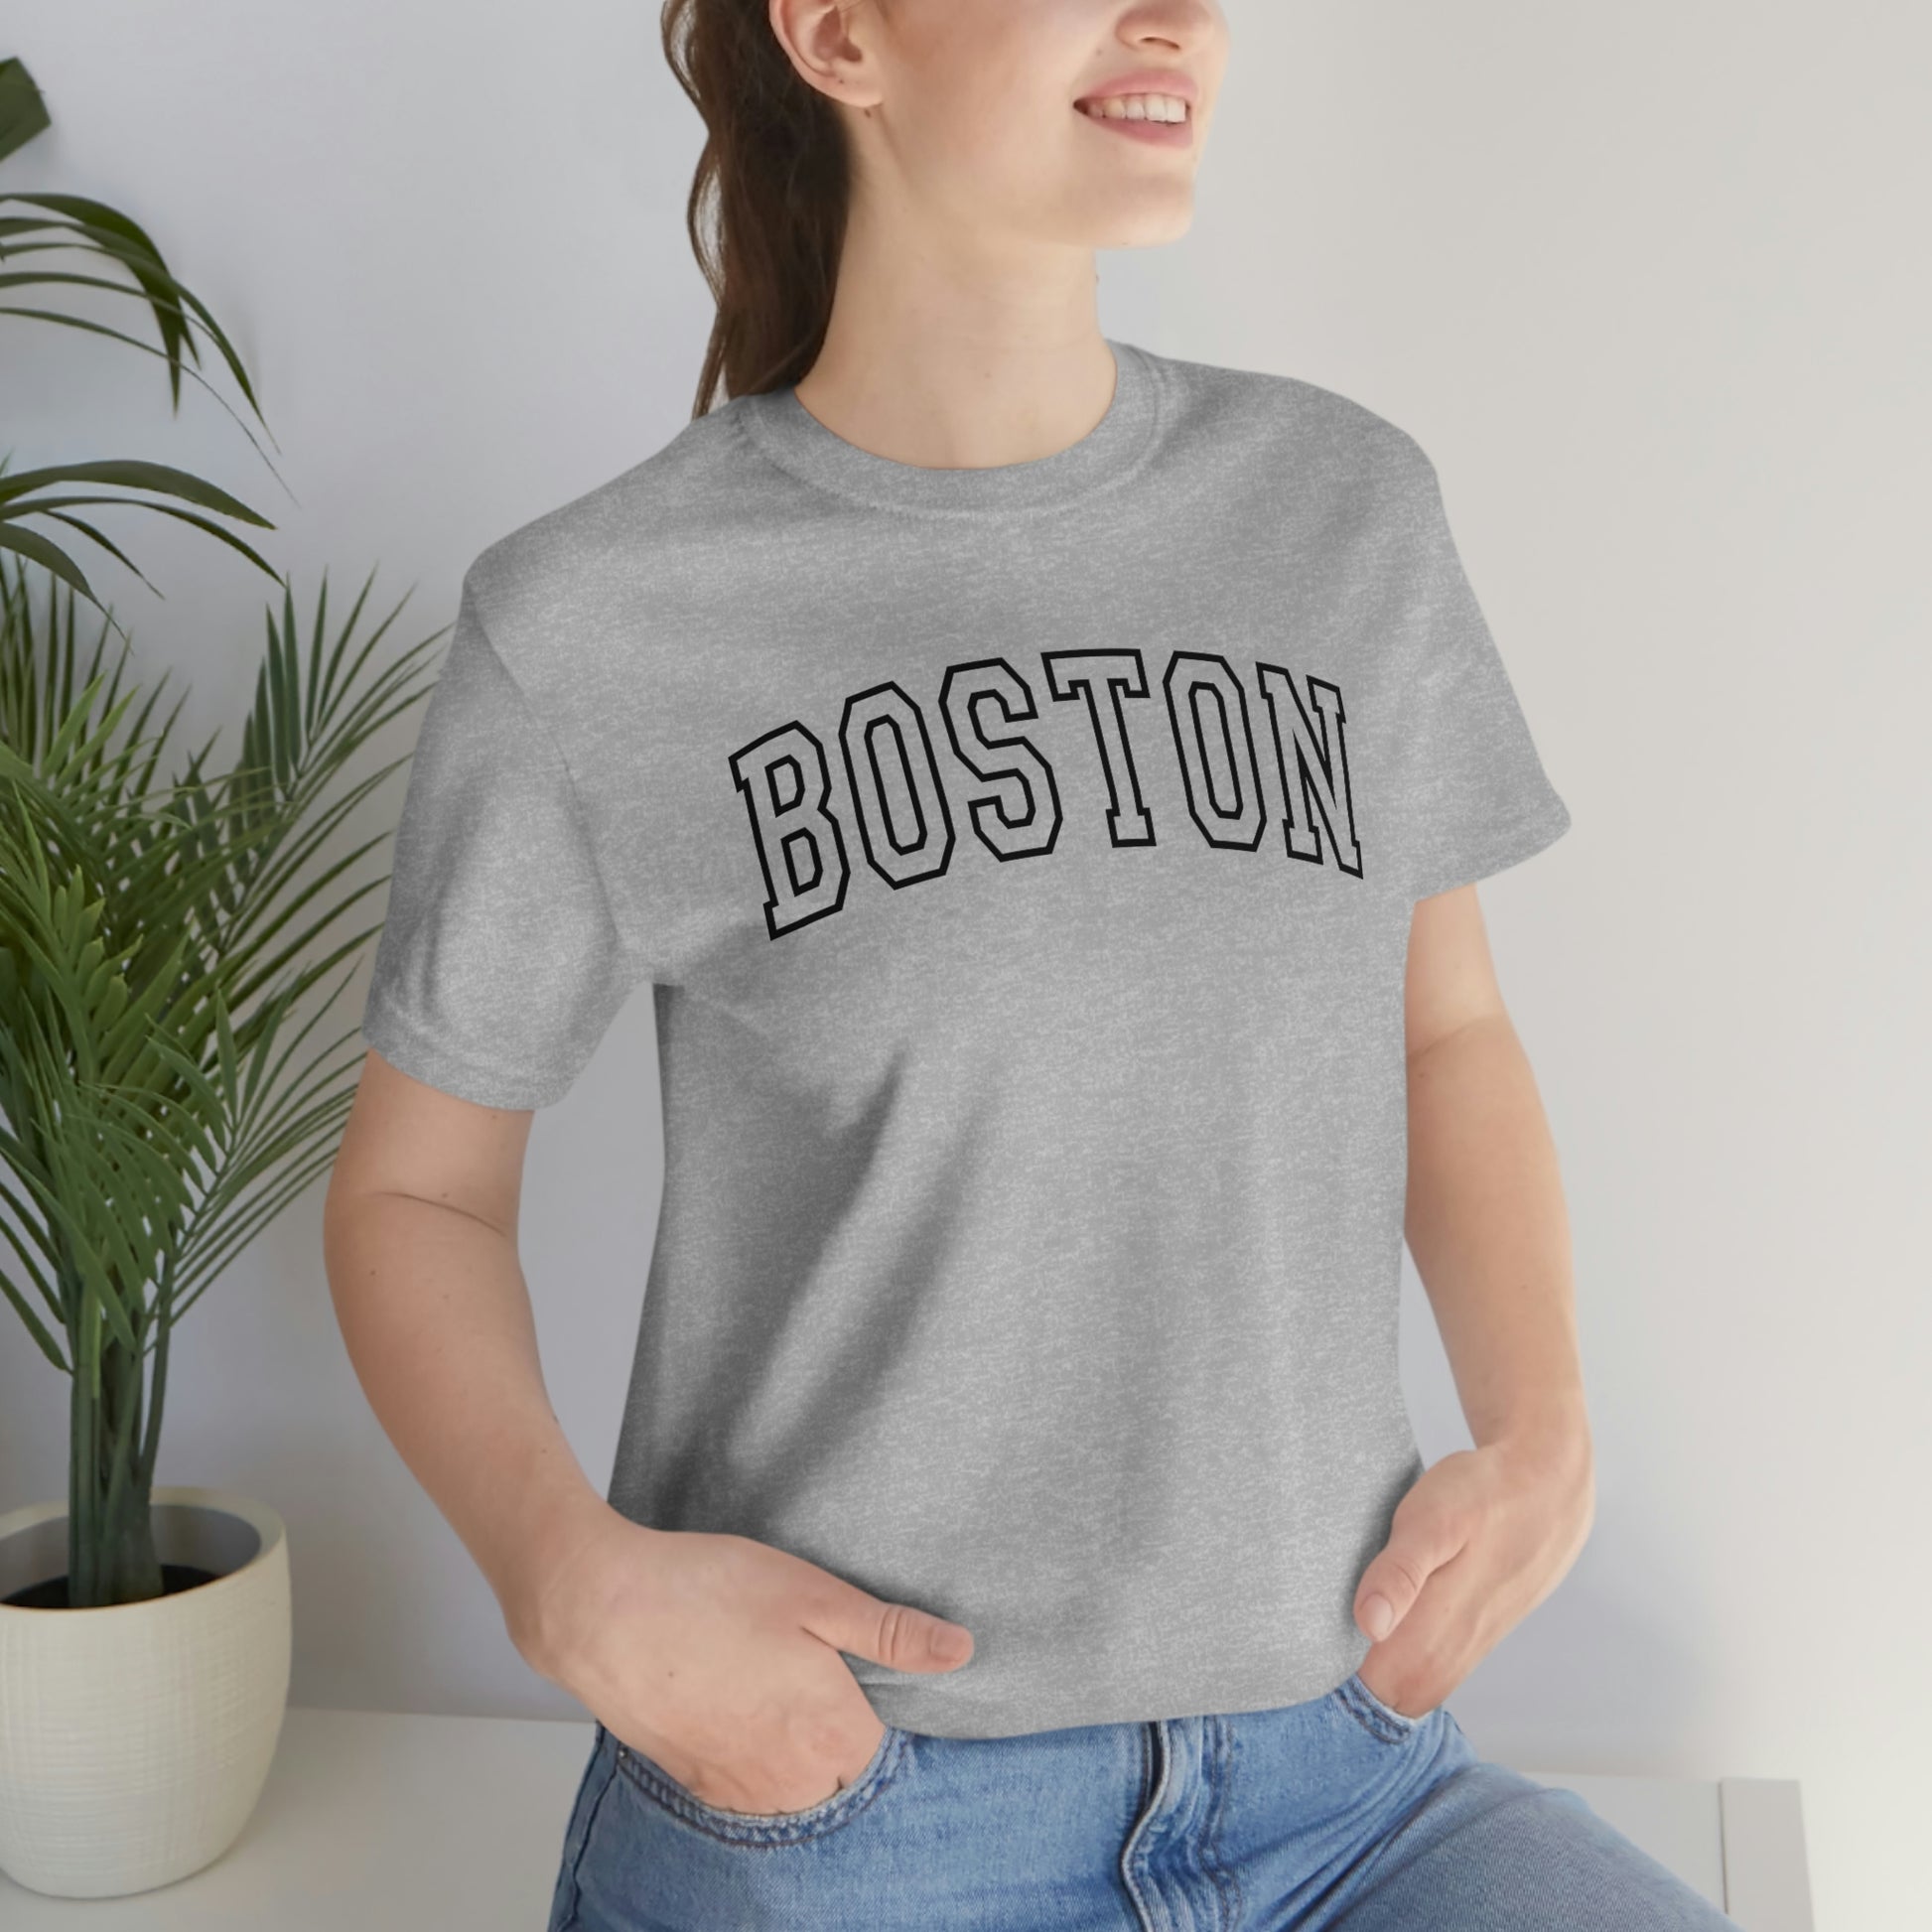 Boston Varsity Letters Arch Short Sleeve T-shirt